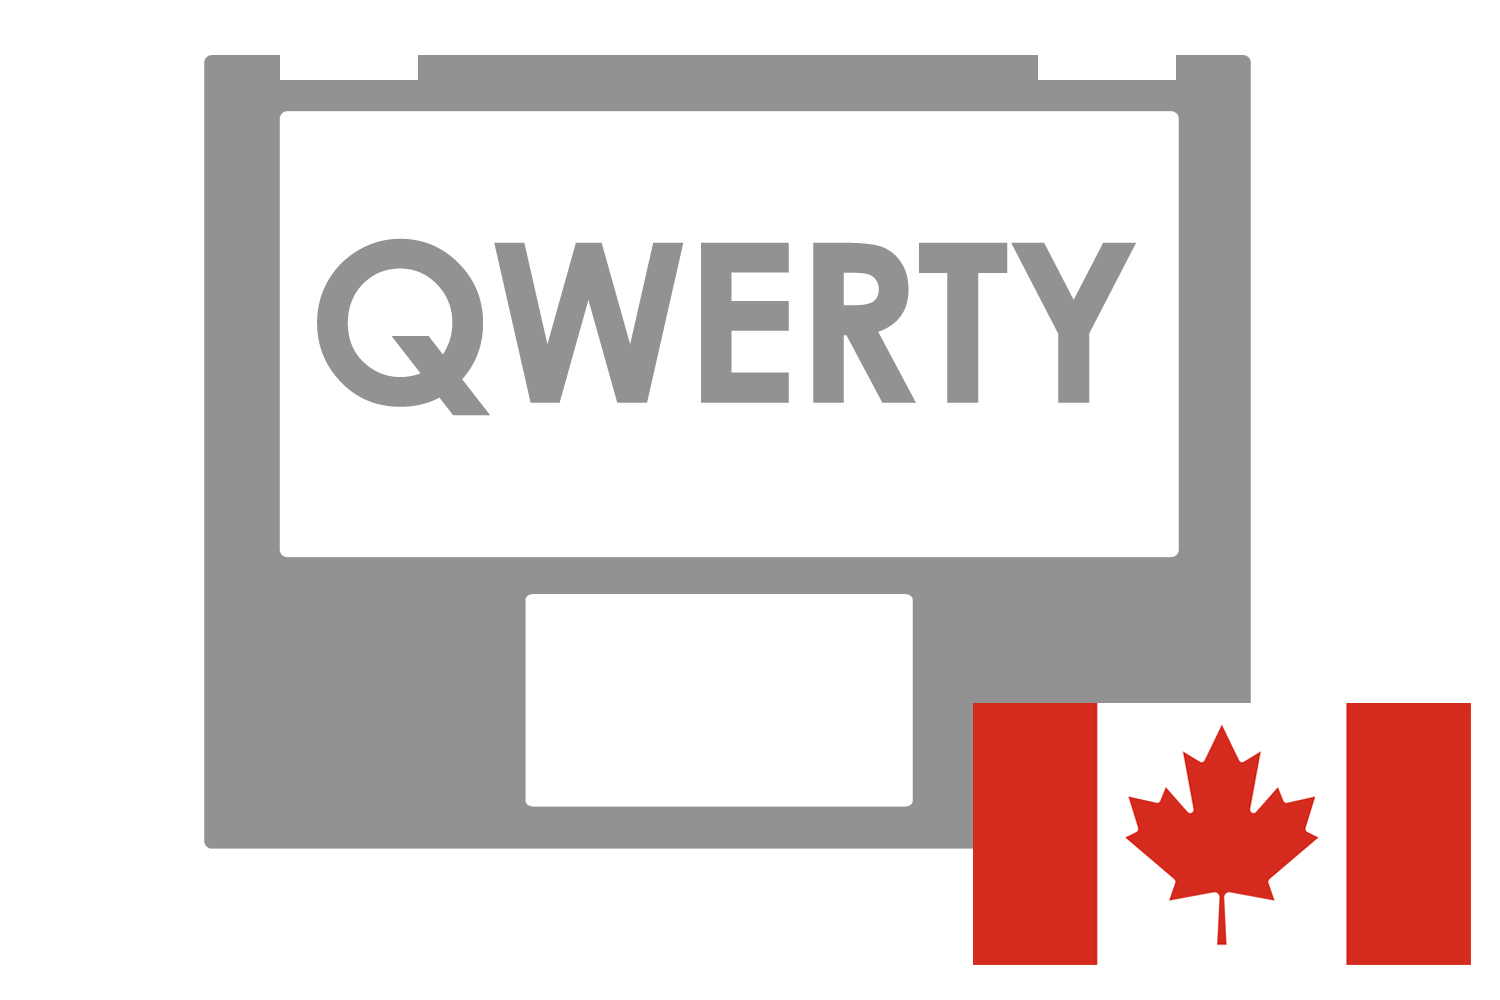 Asus Black backlit Canadian QWERTY keyboard